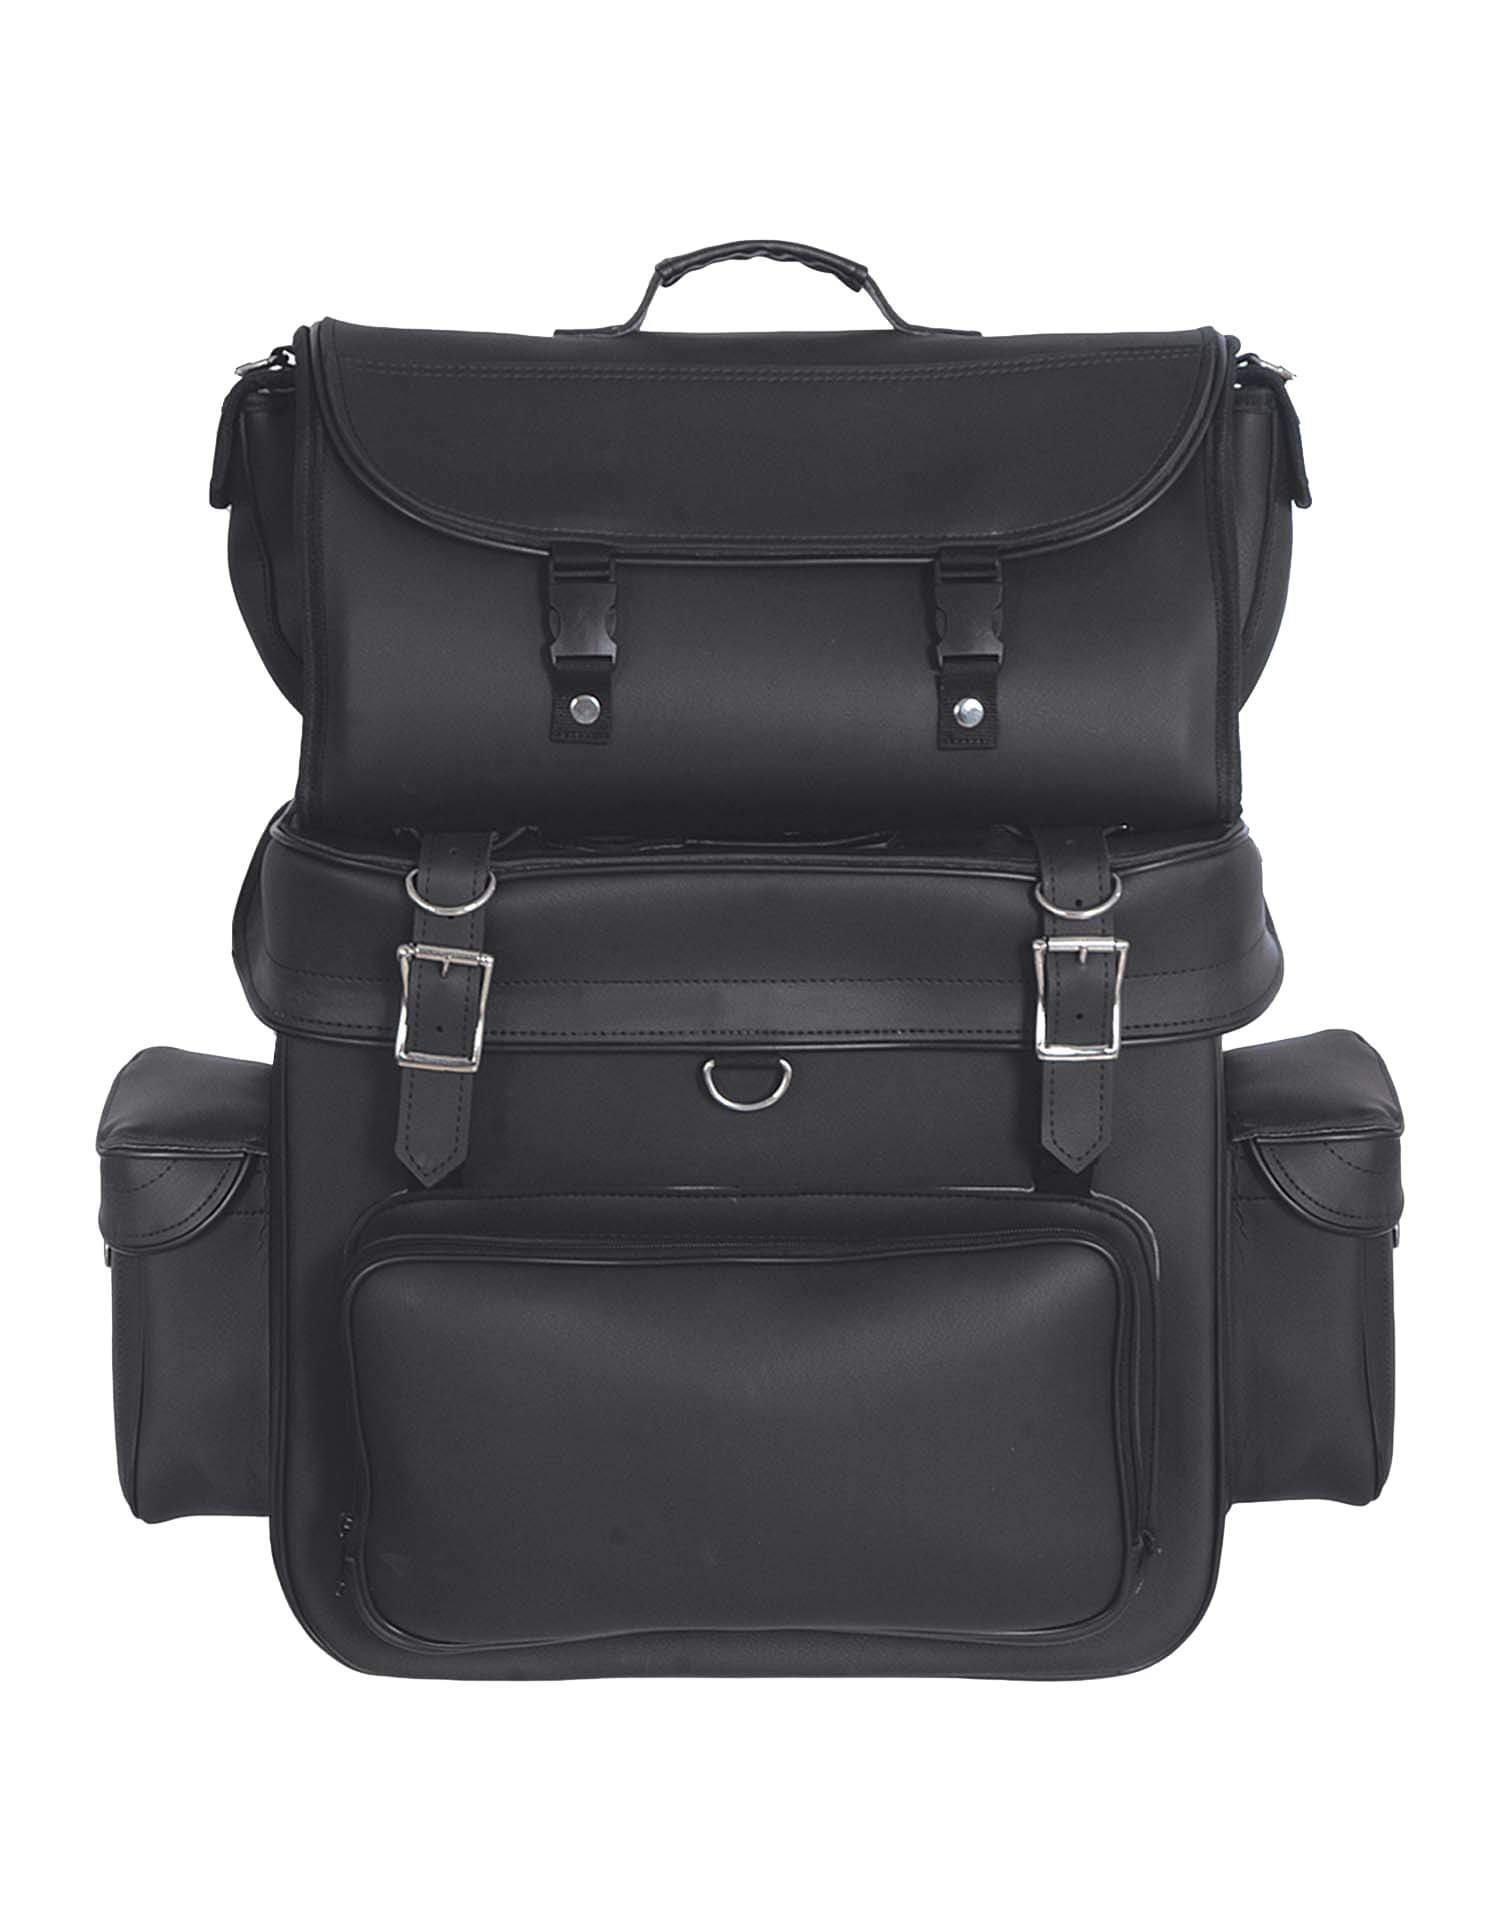 UNIK PVC Sissy Bar Bag - Travel Bags - SKU 2995-00-UN